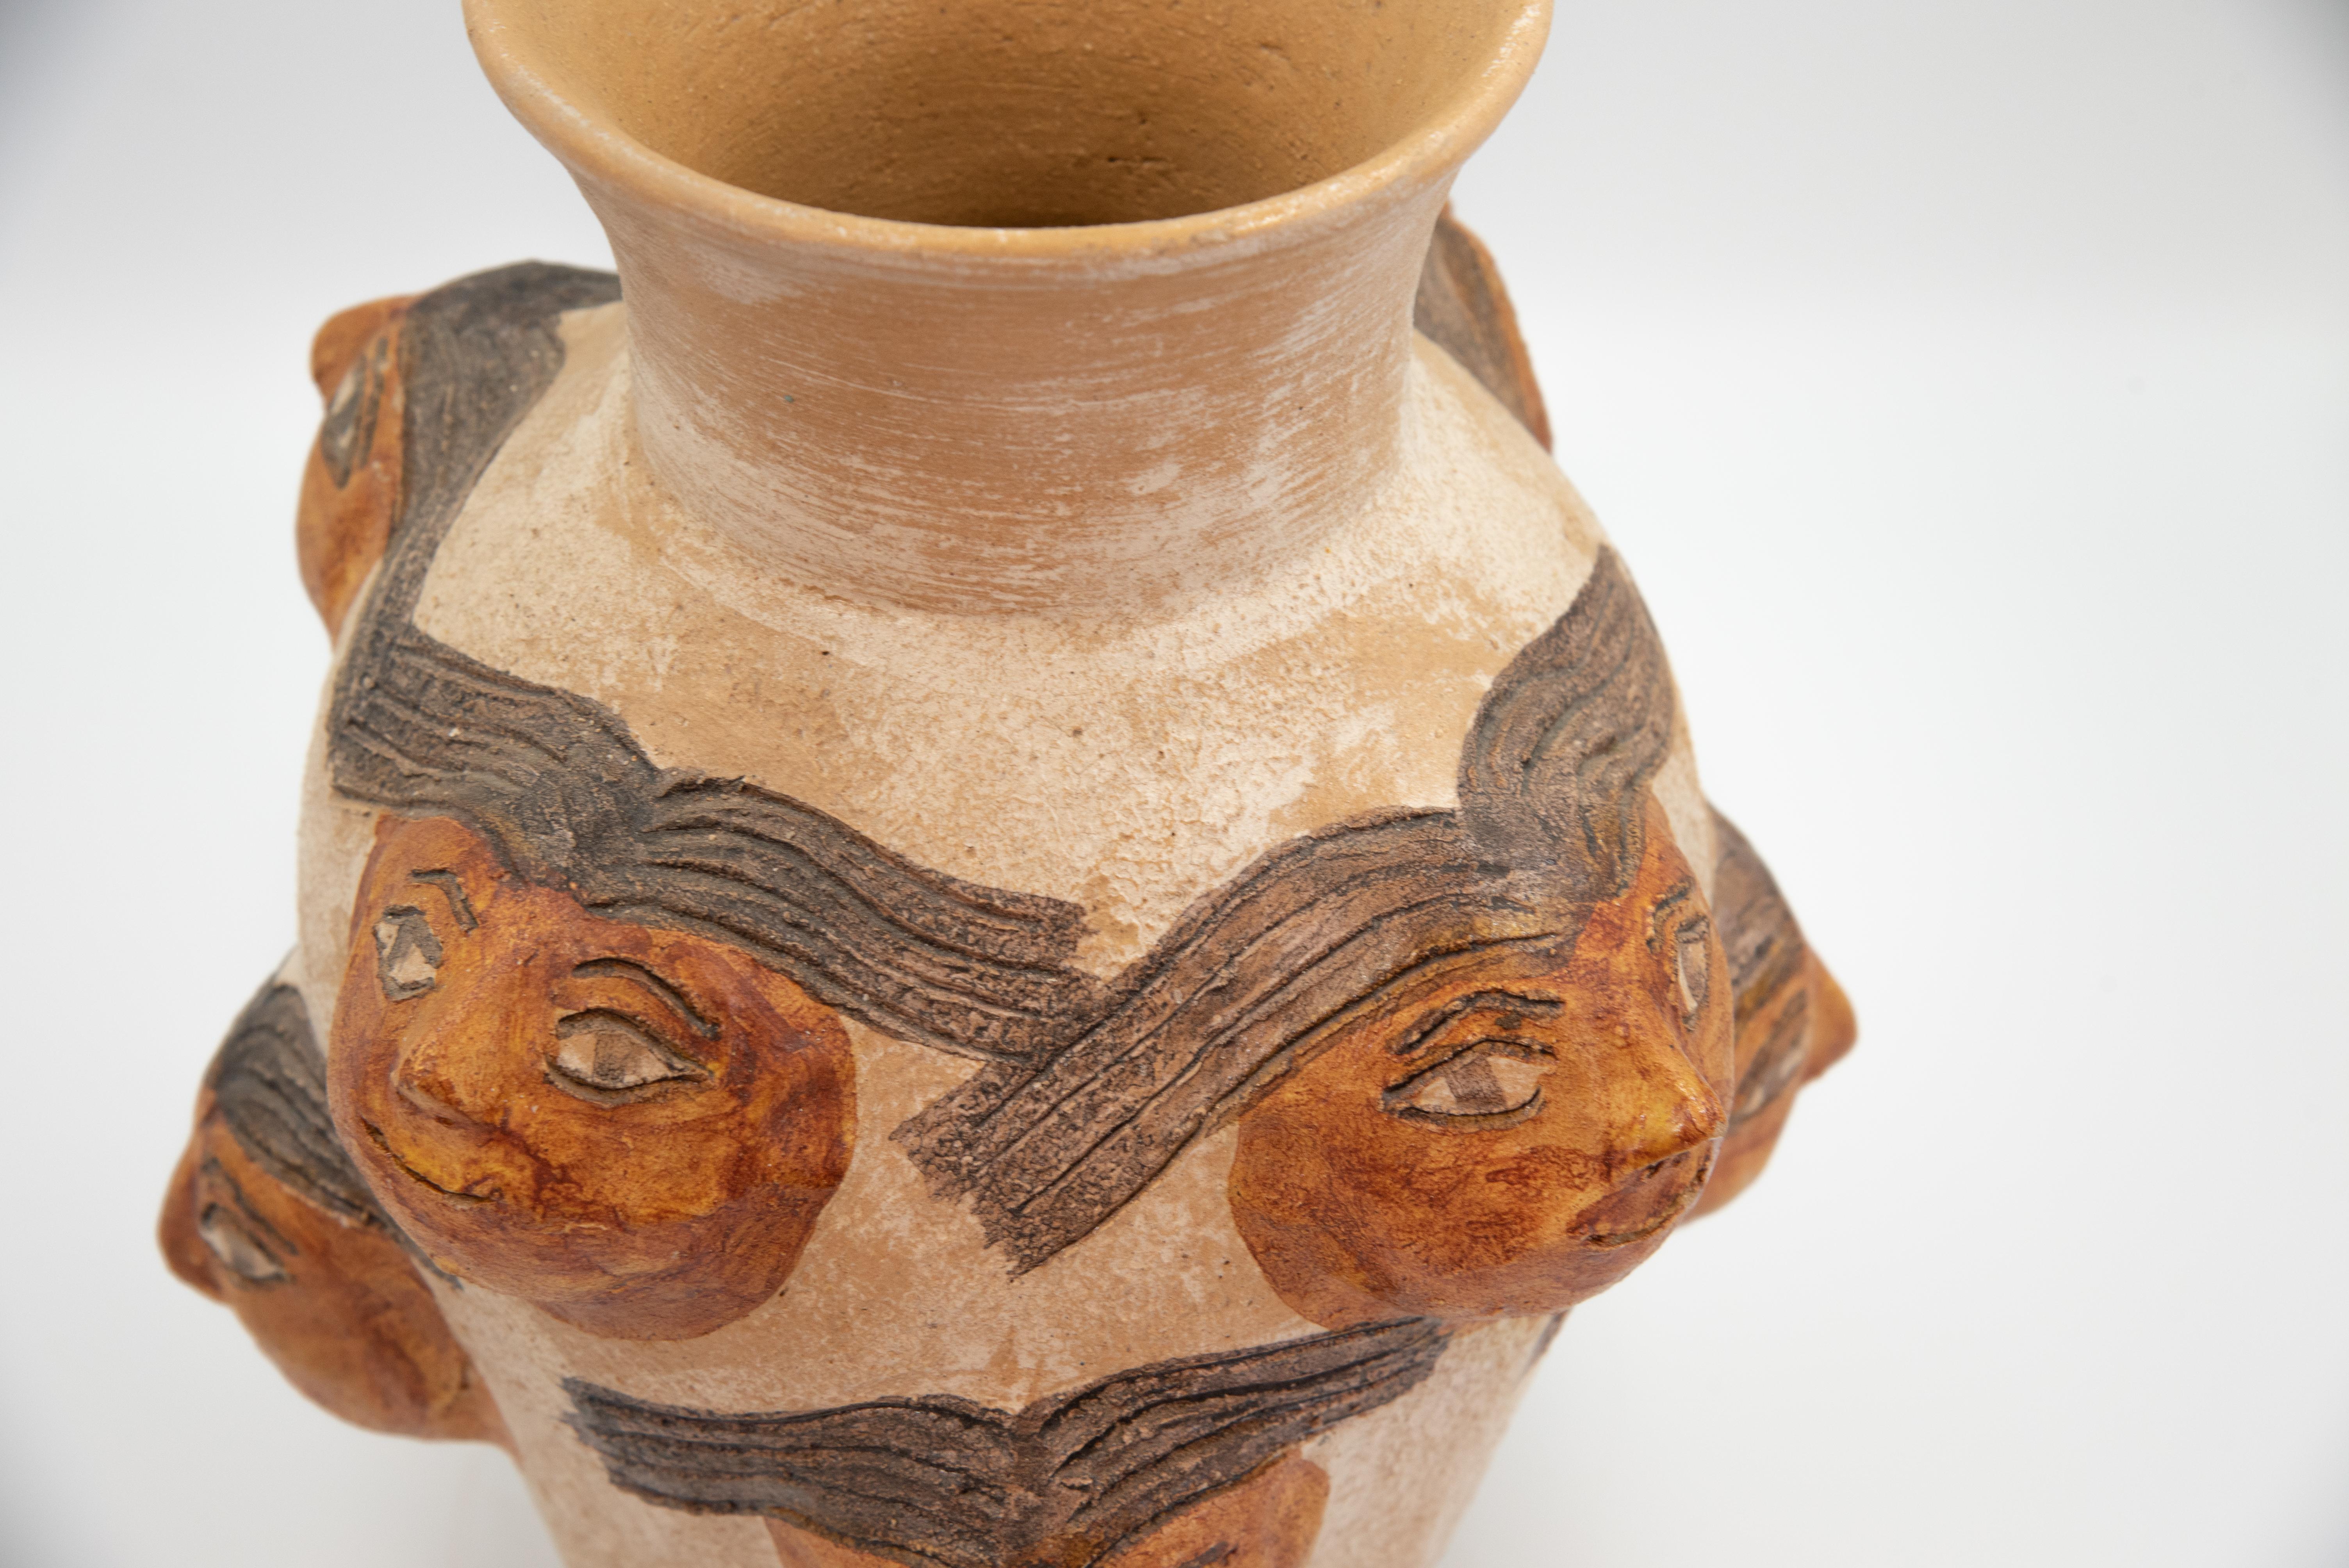 Varnished Mexican Ceramic Jug with Faces Dolores Porras Folk Art Decorative Vessel